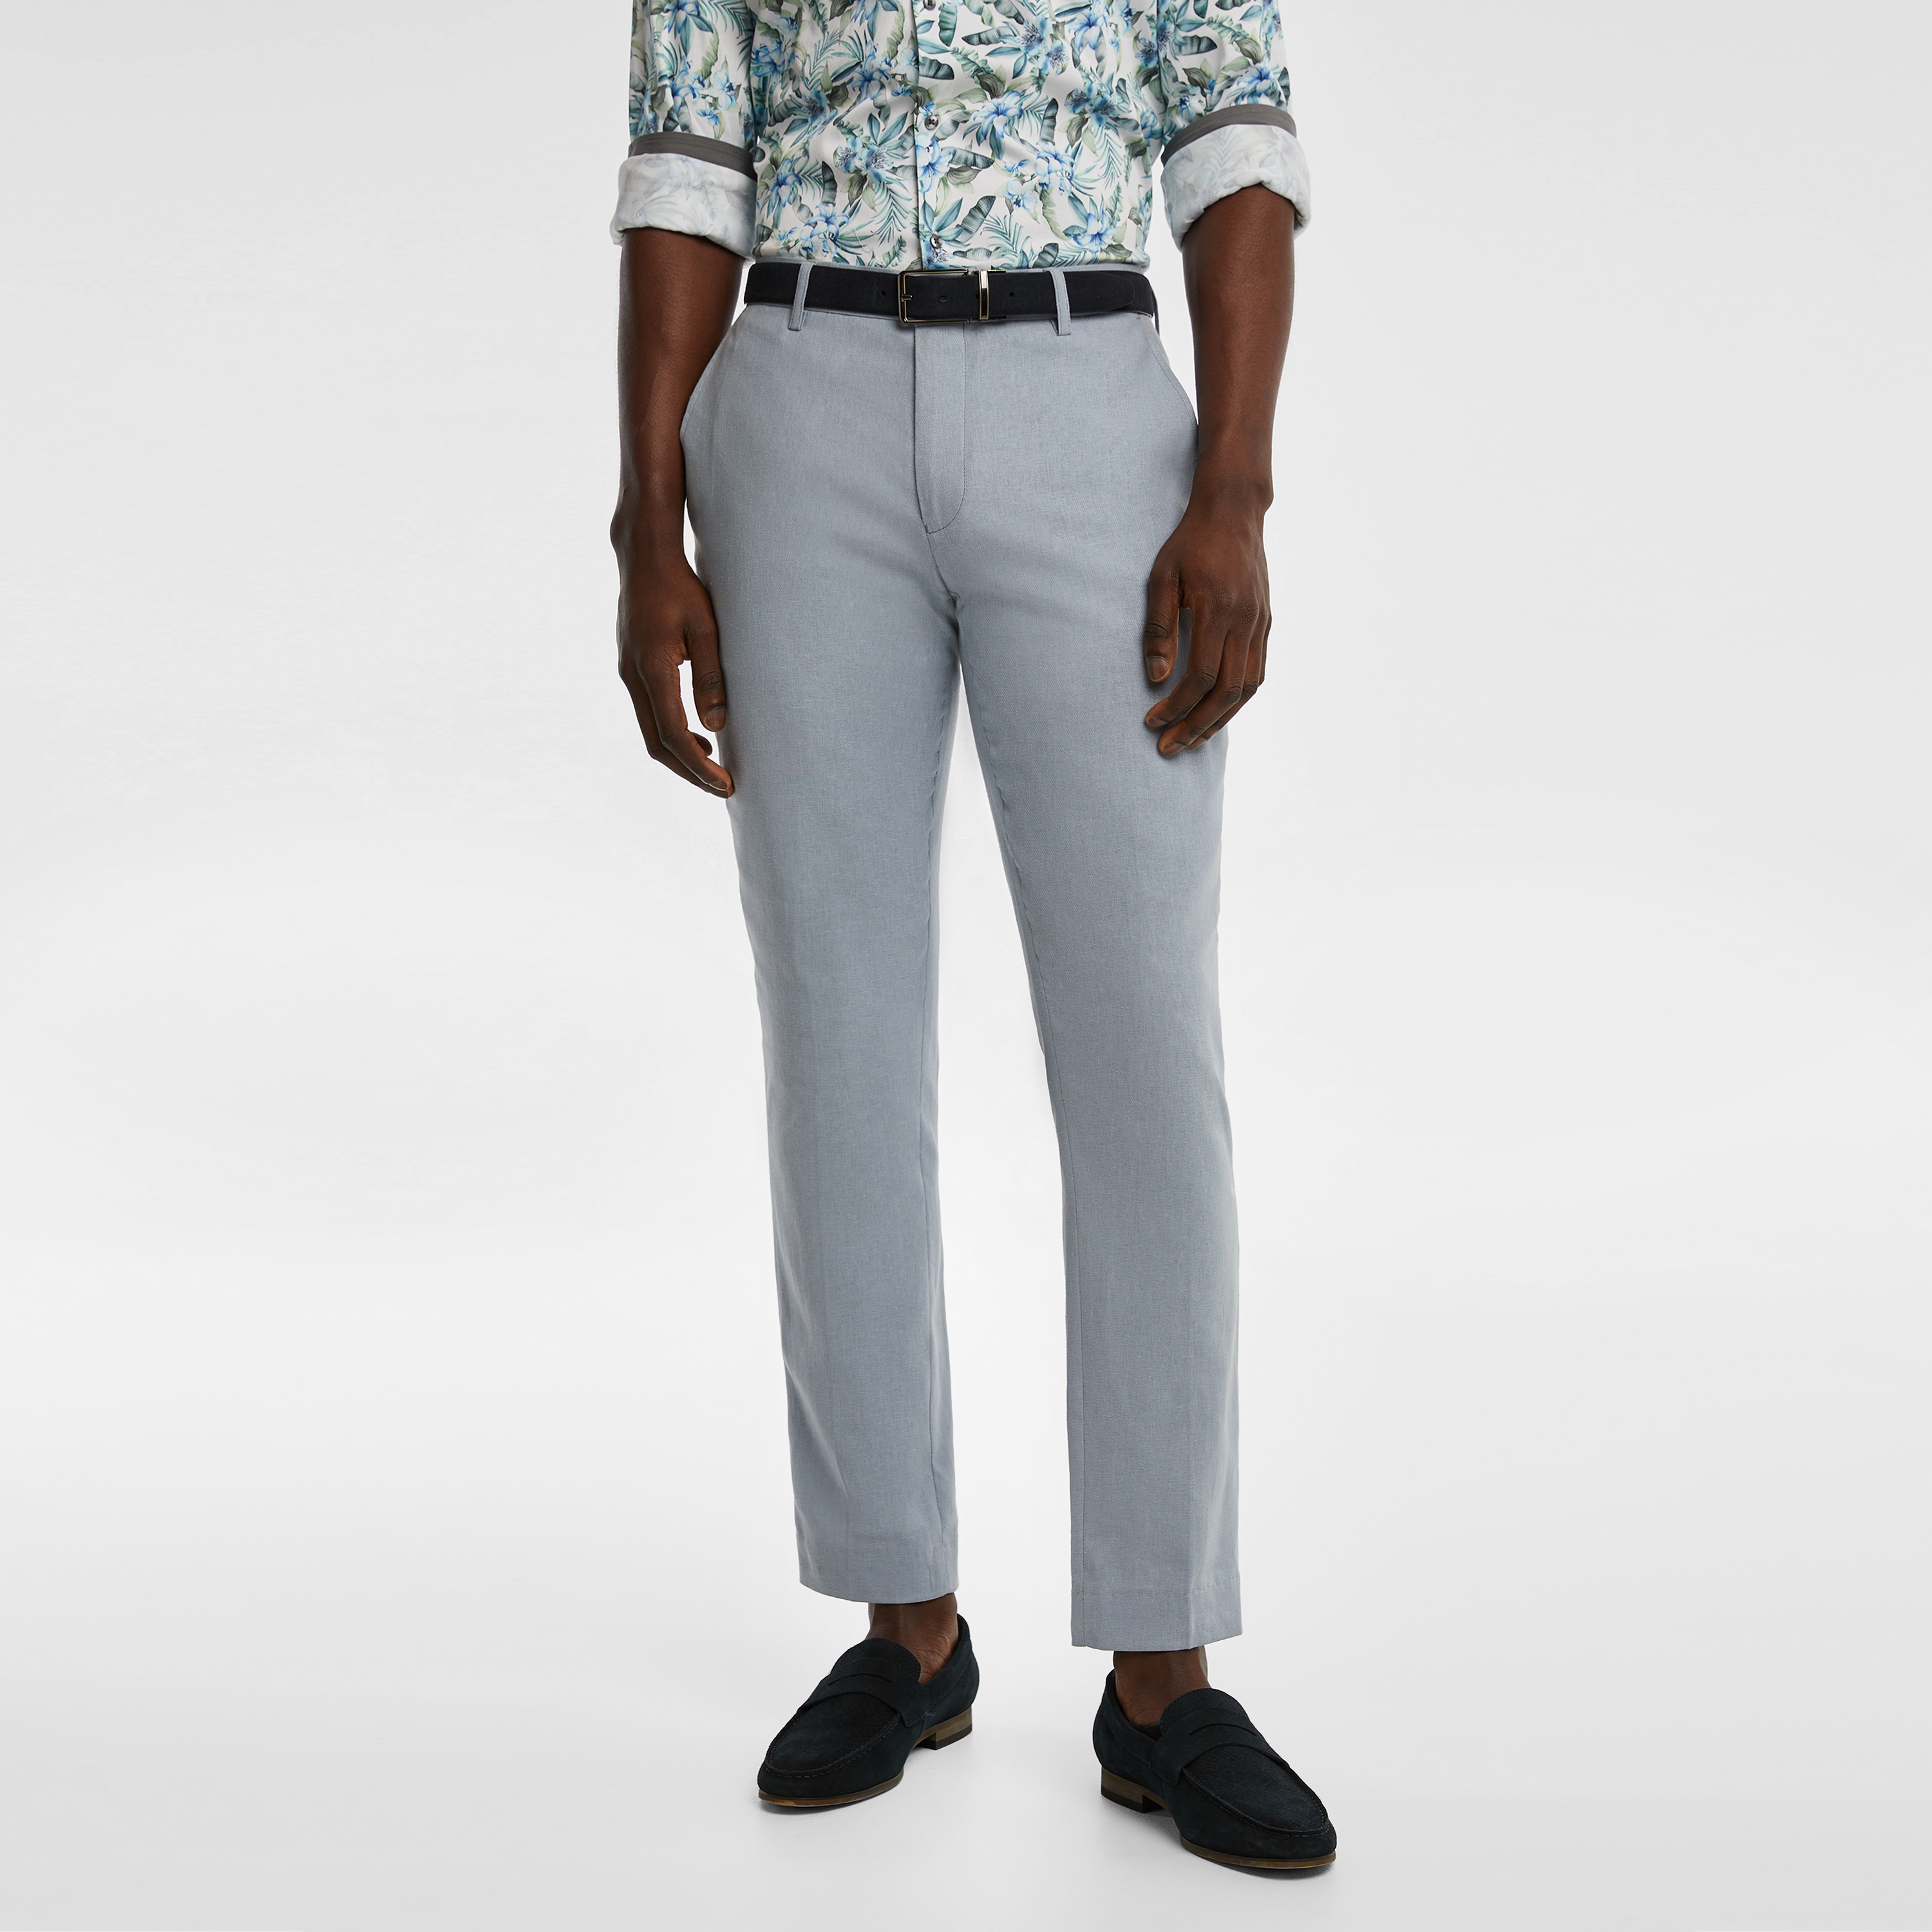 Men's Trousers Linen Brown White Elegant Gentleman Suit Pants Summer  Streetwear Smart Casual - AliExpress